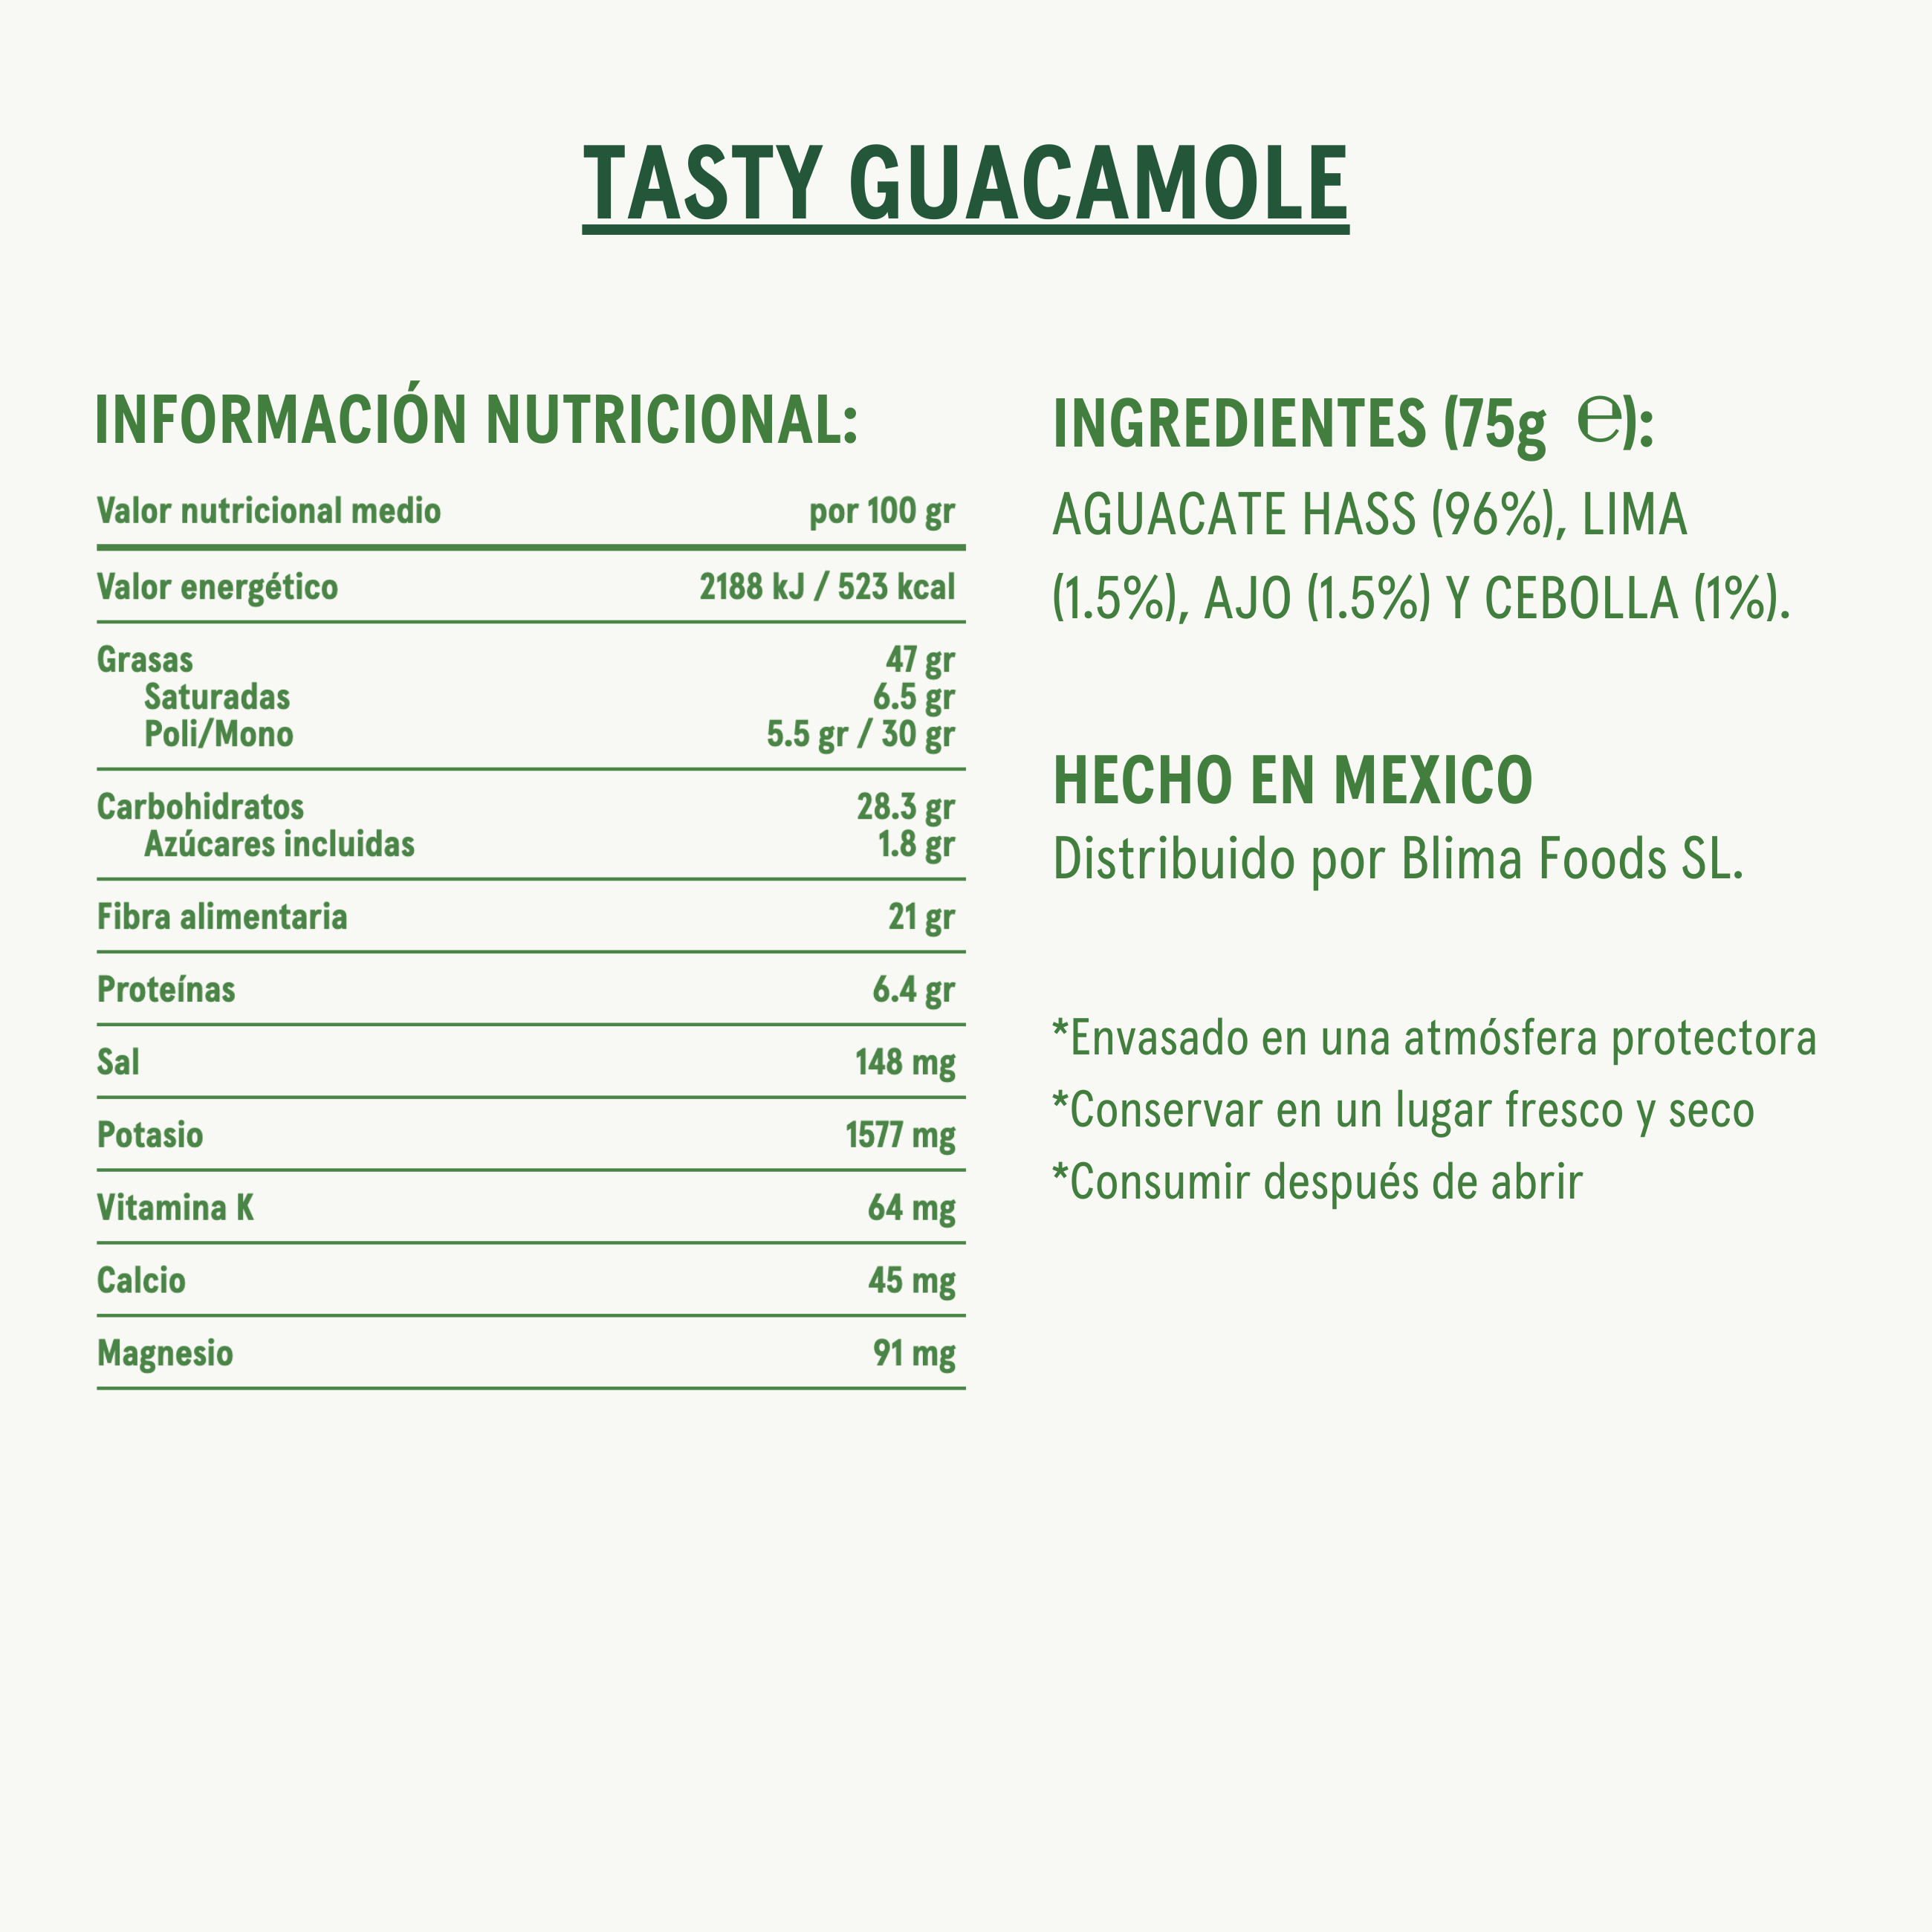 Tasty Guacamole